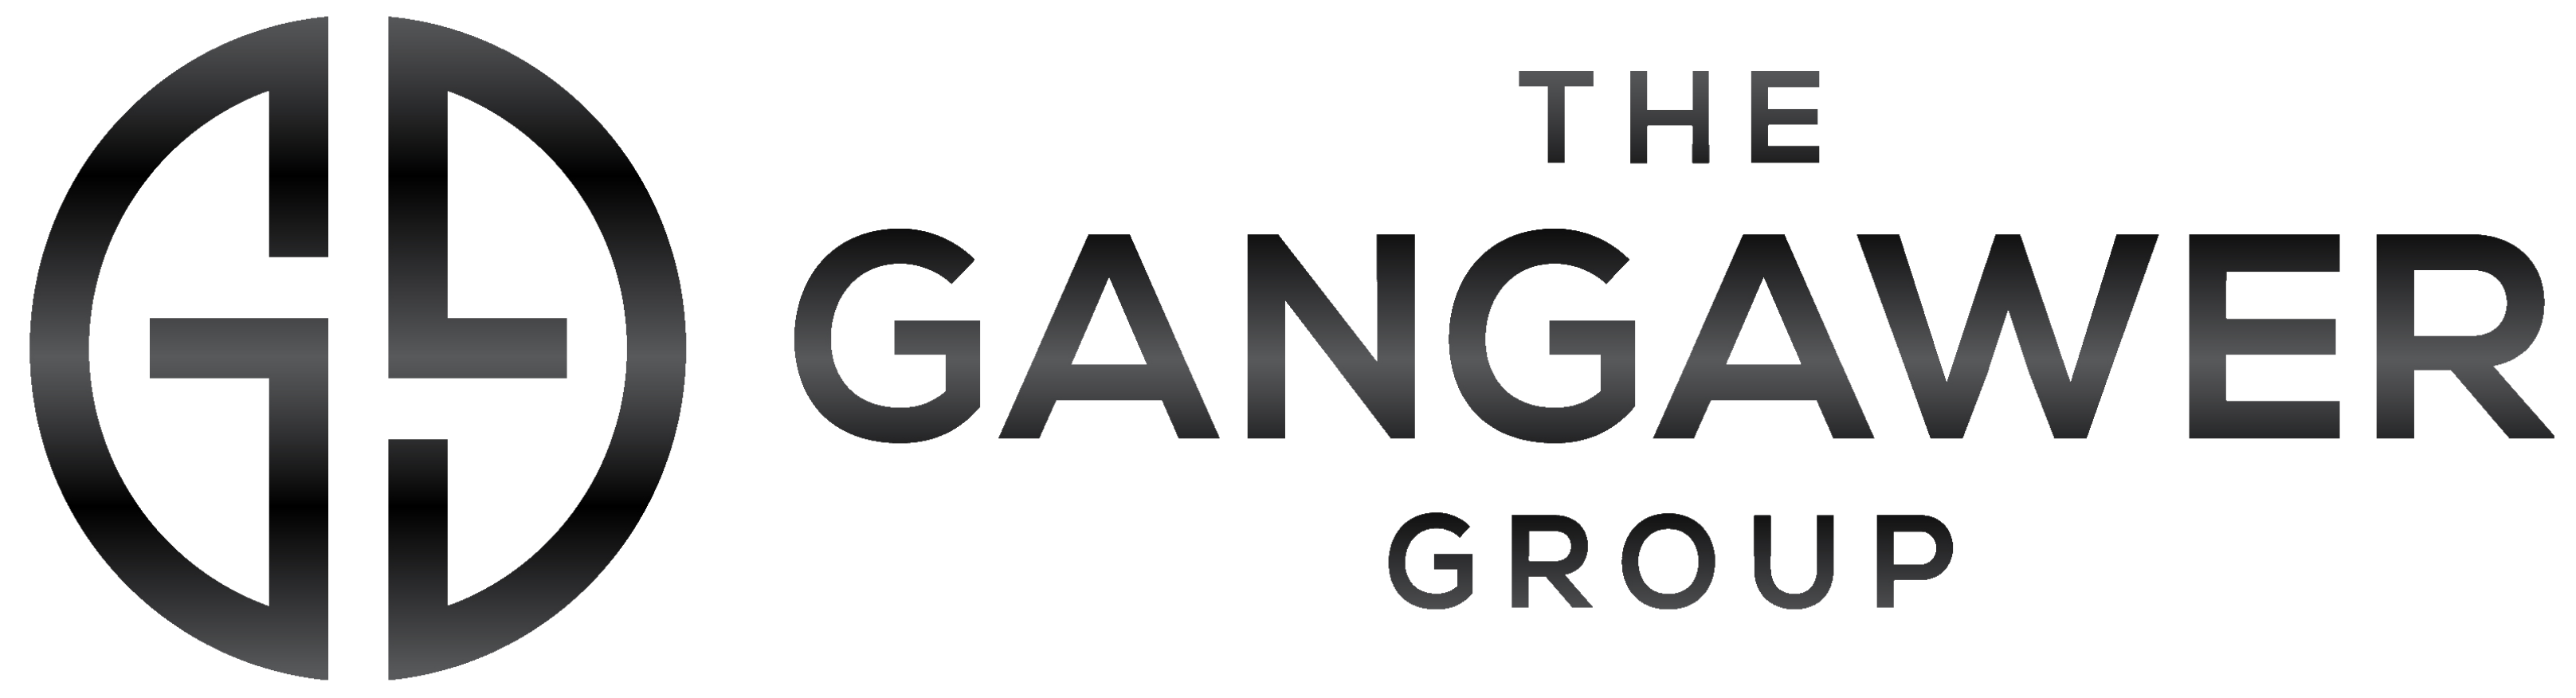 The Gangawer Group at Charles Rutenberg Realty